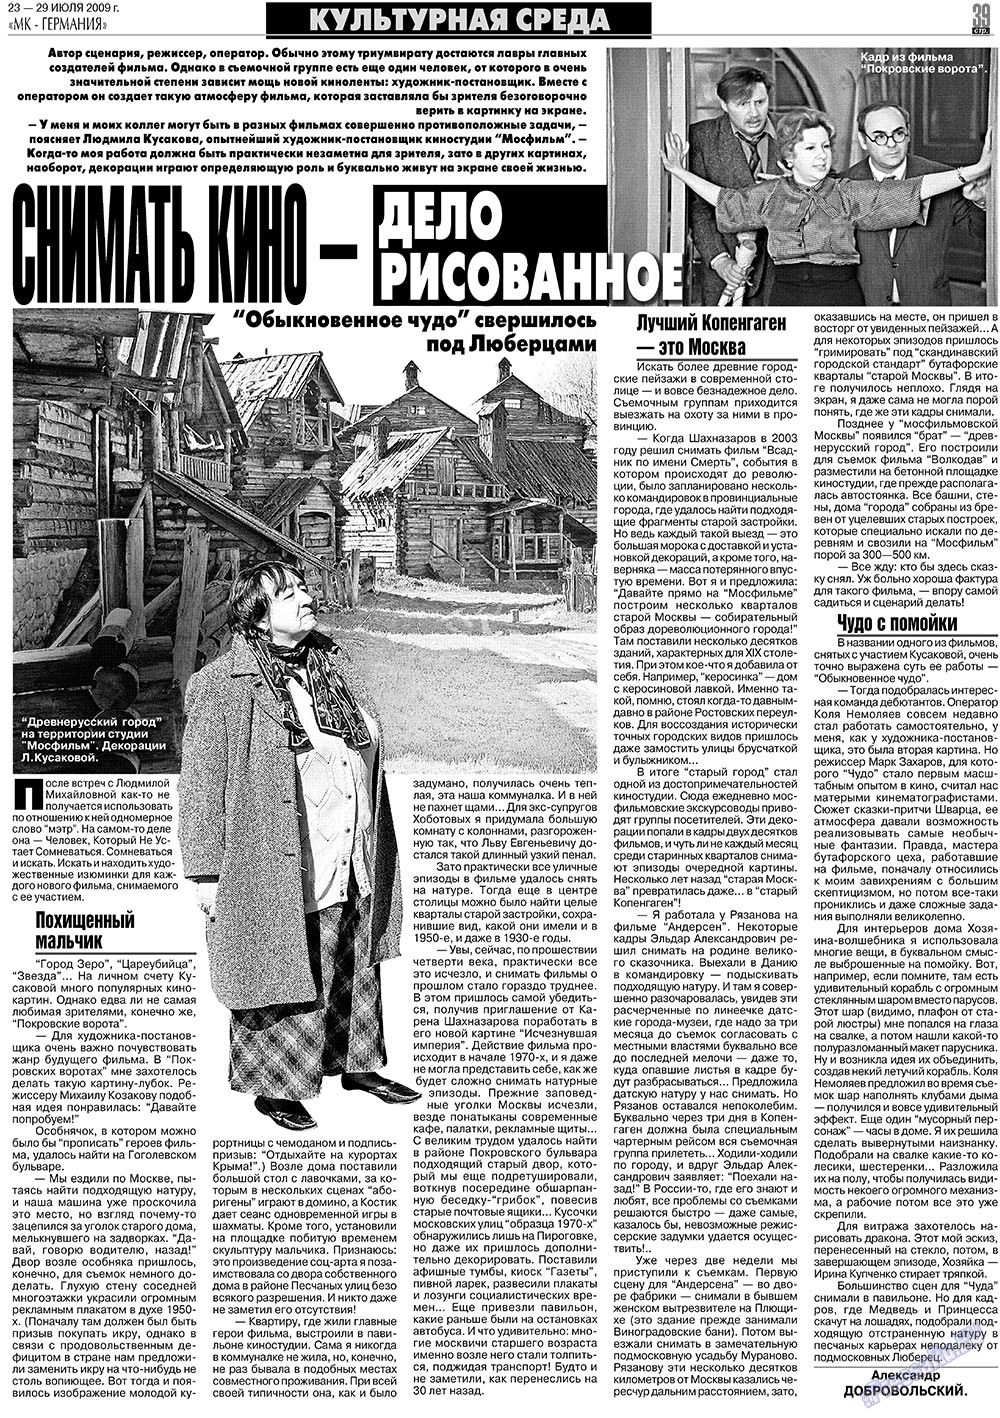 МК-Германия, газета. 2009 №30 стр.39